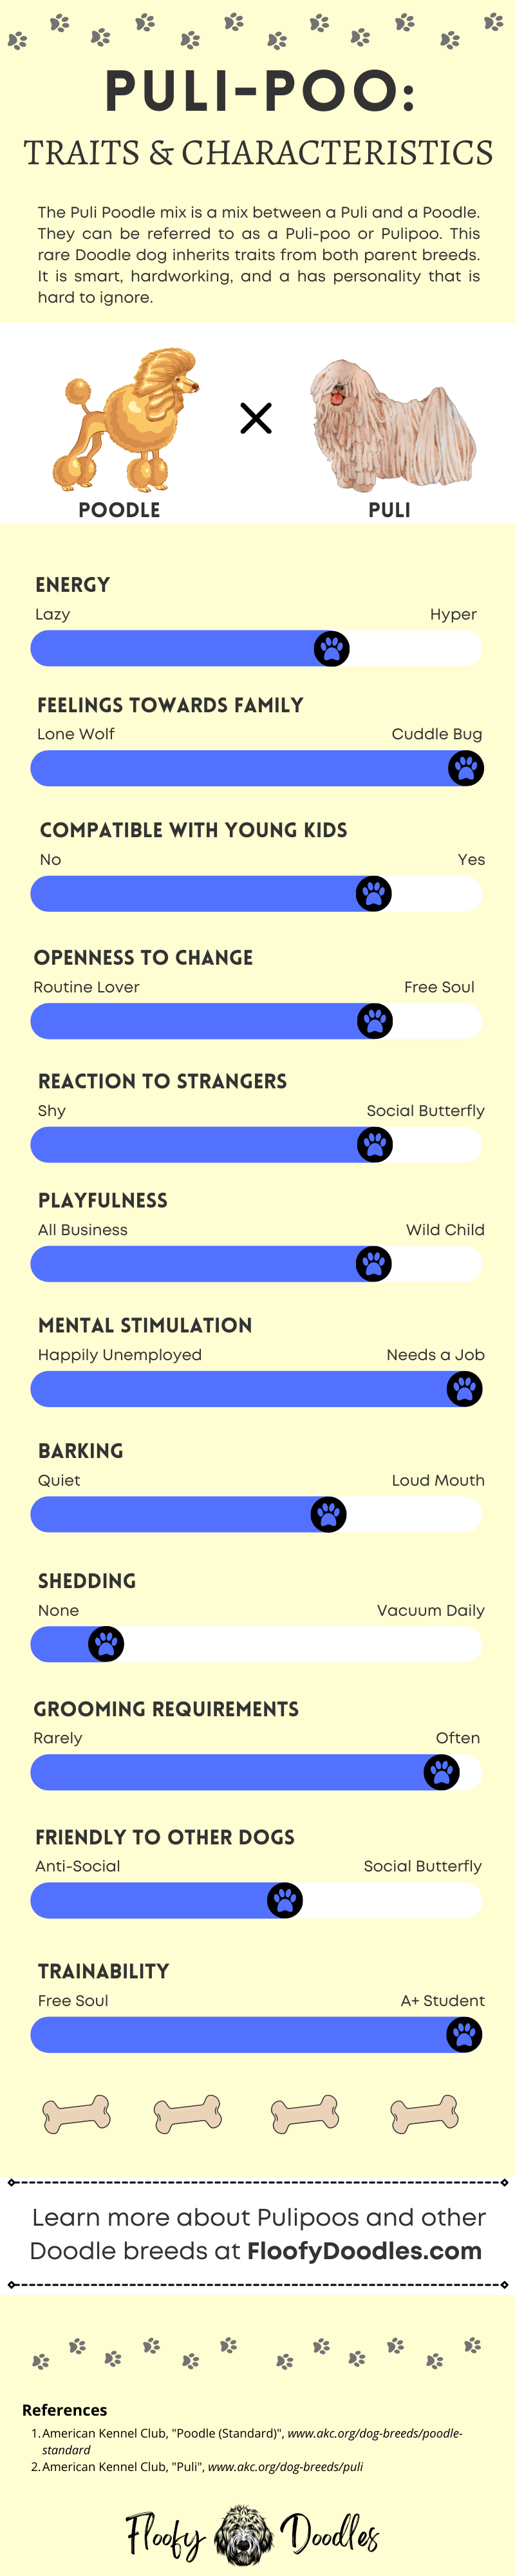 Pulipoo traits infographic